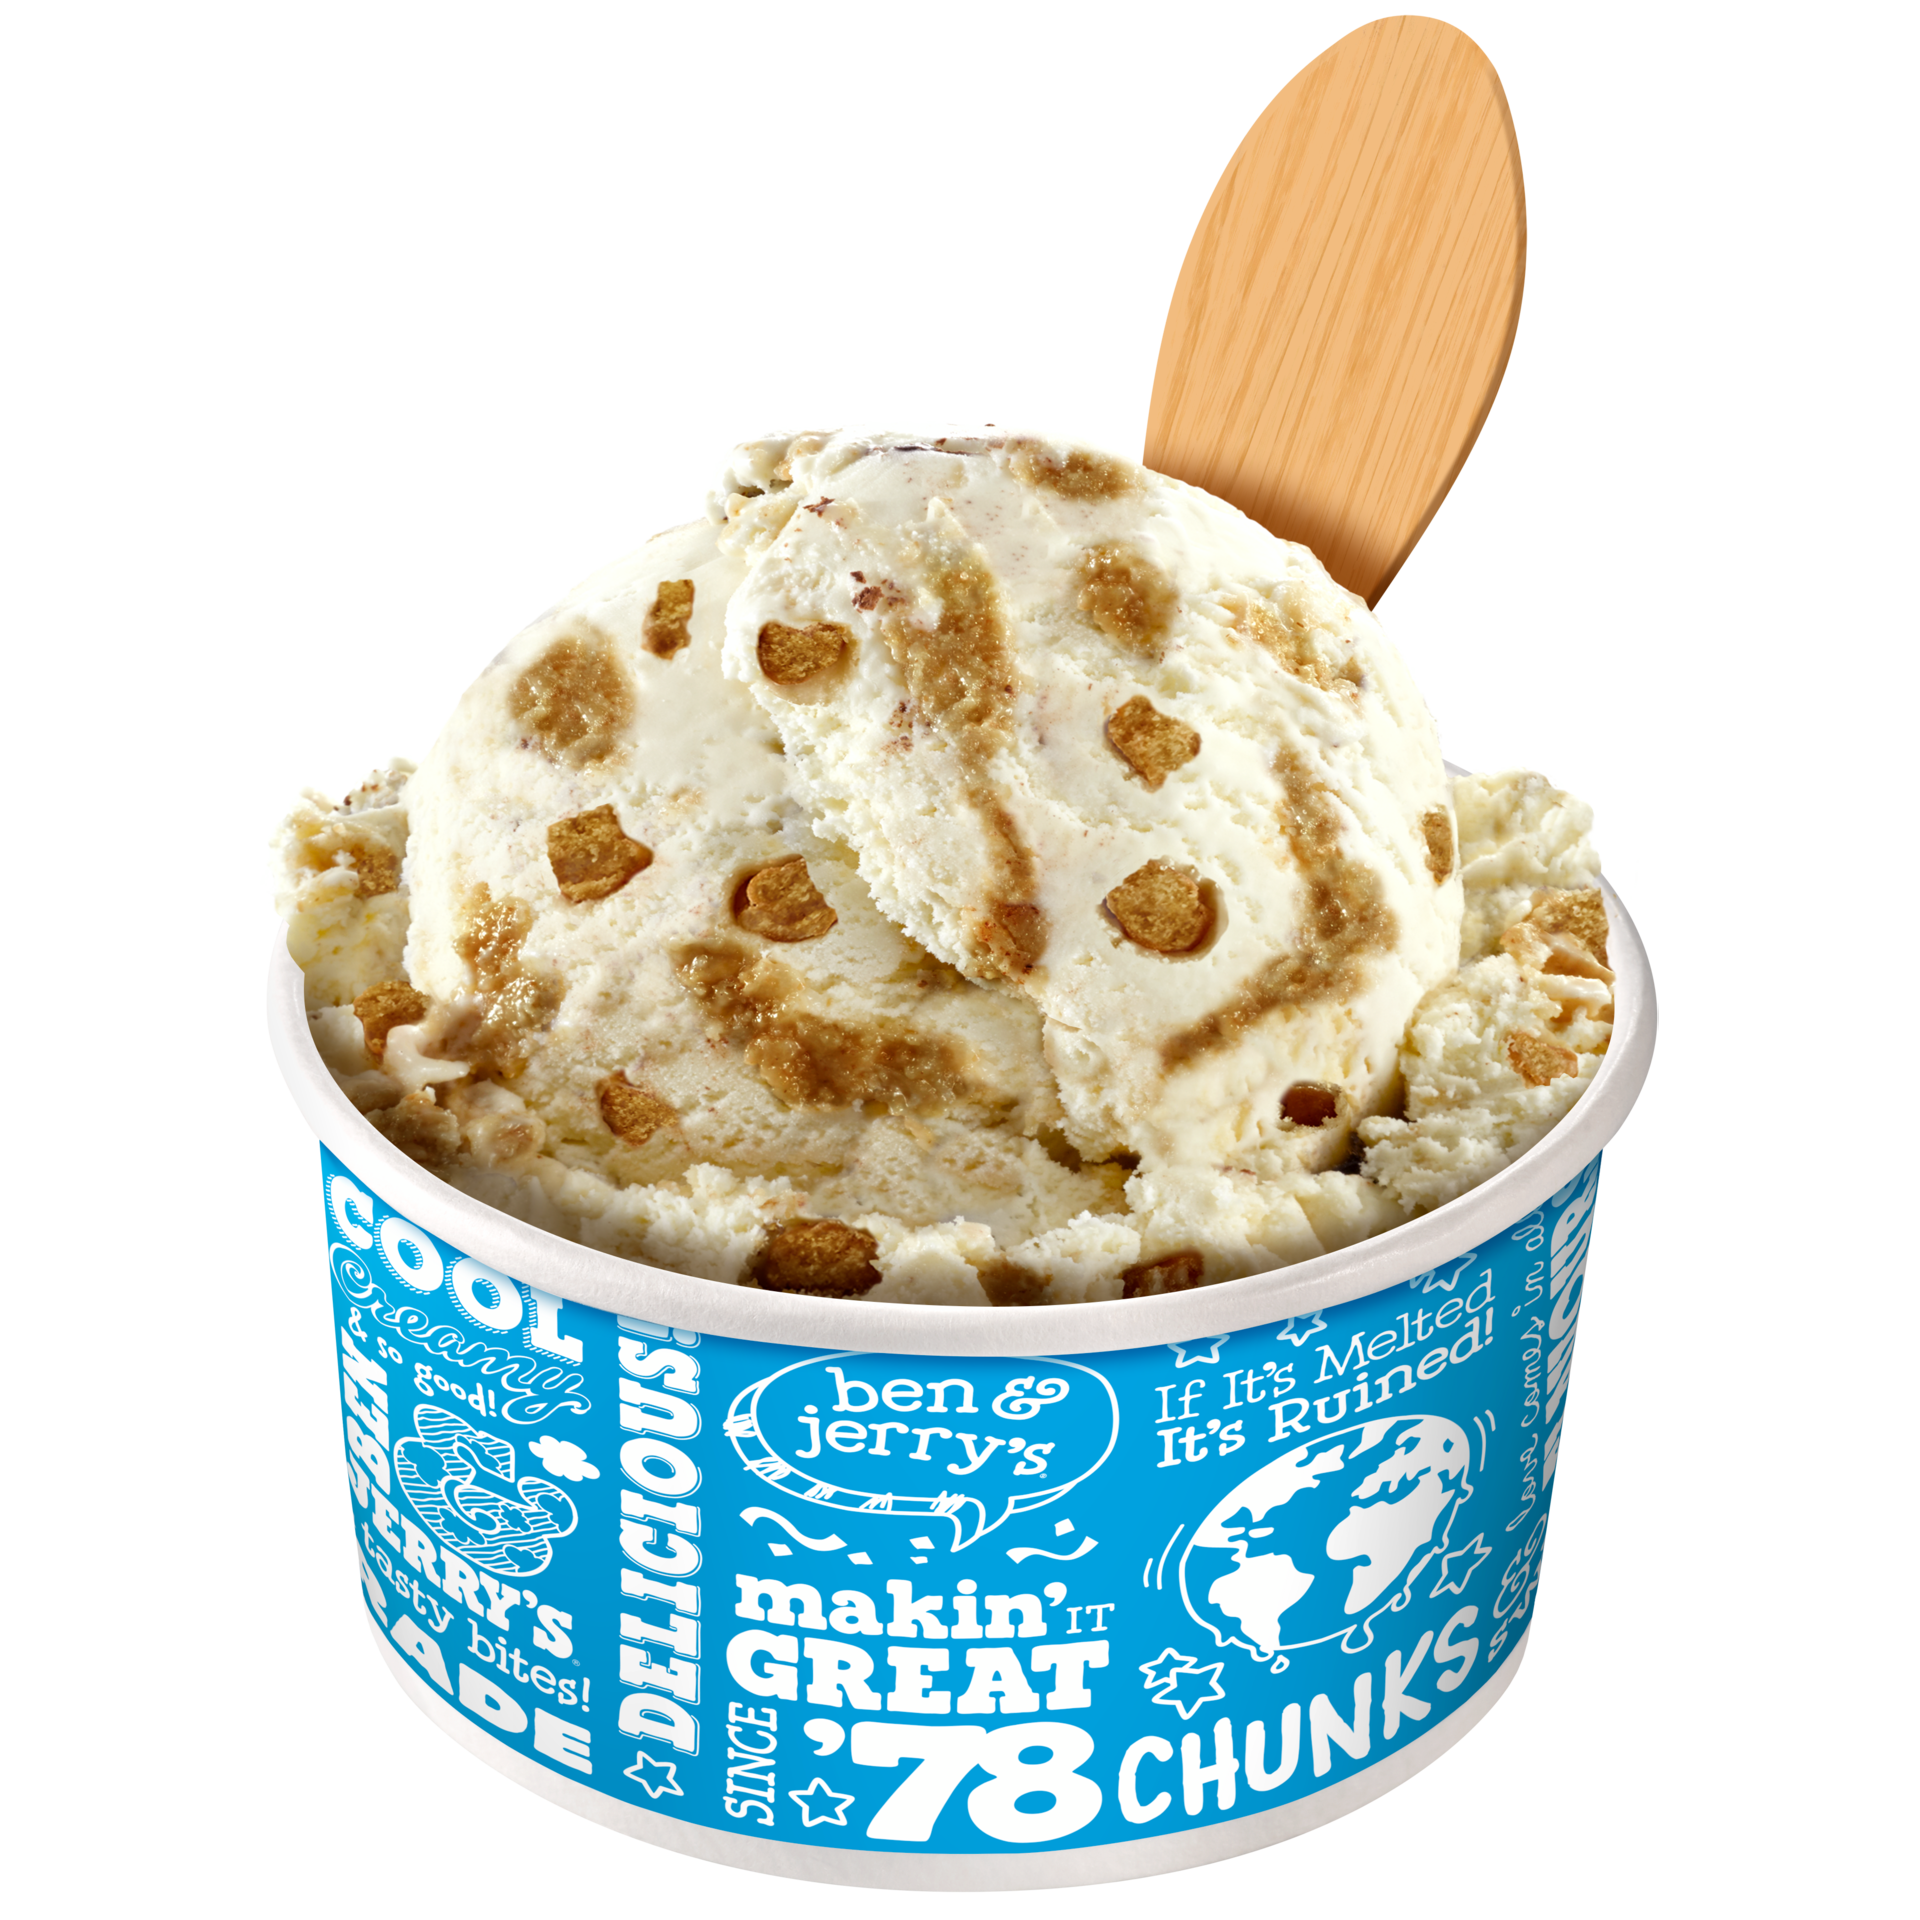 Churray for Churros!™ Original Ice Cream Scoop Shops